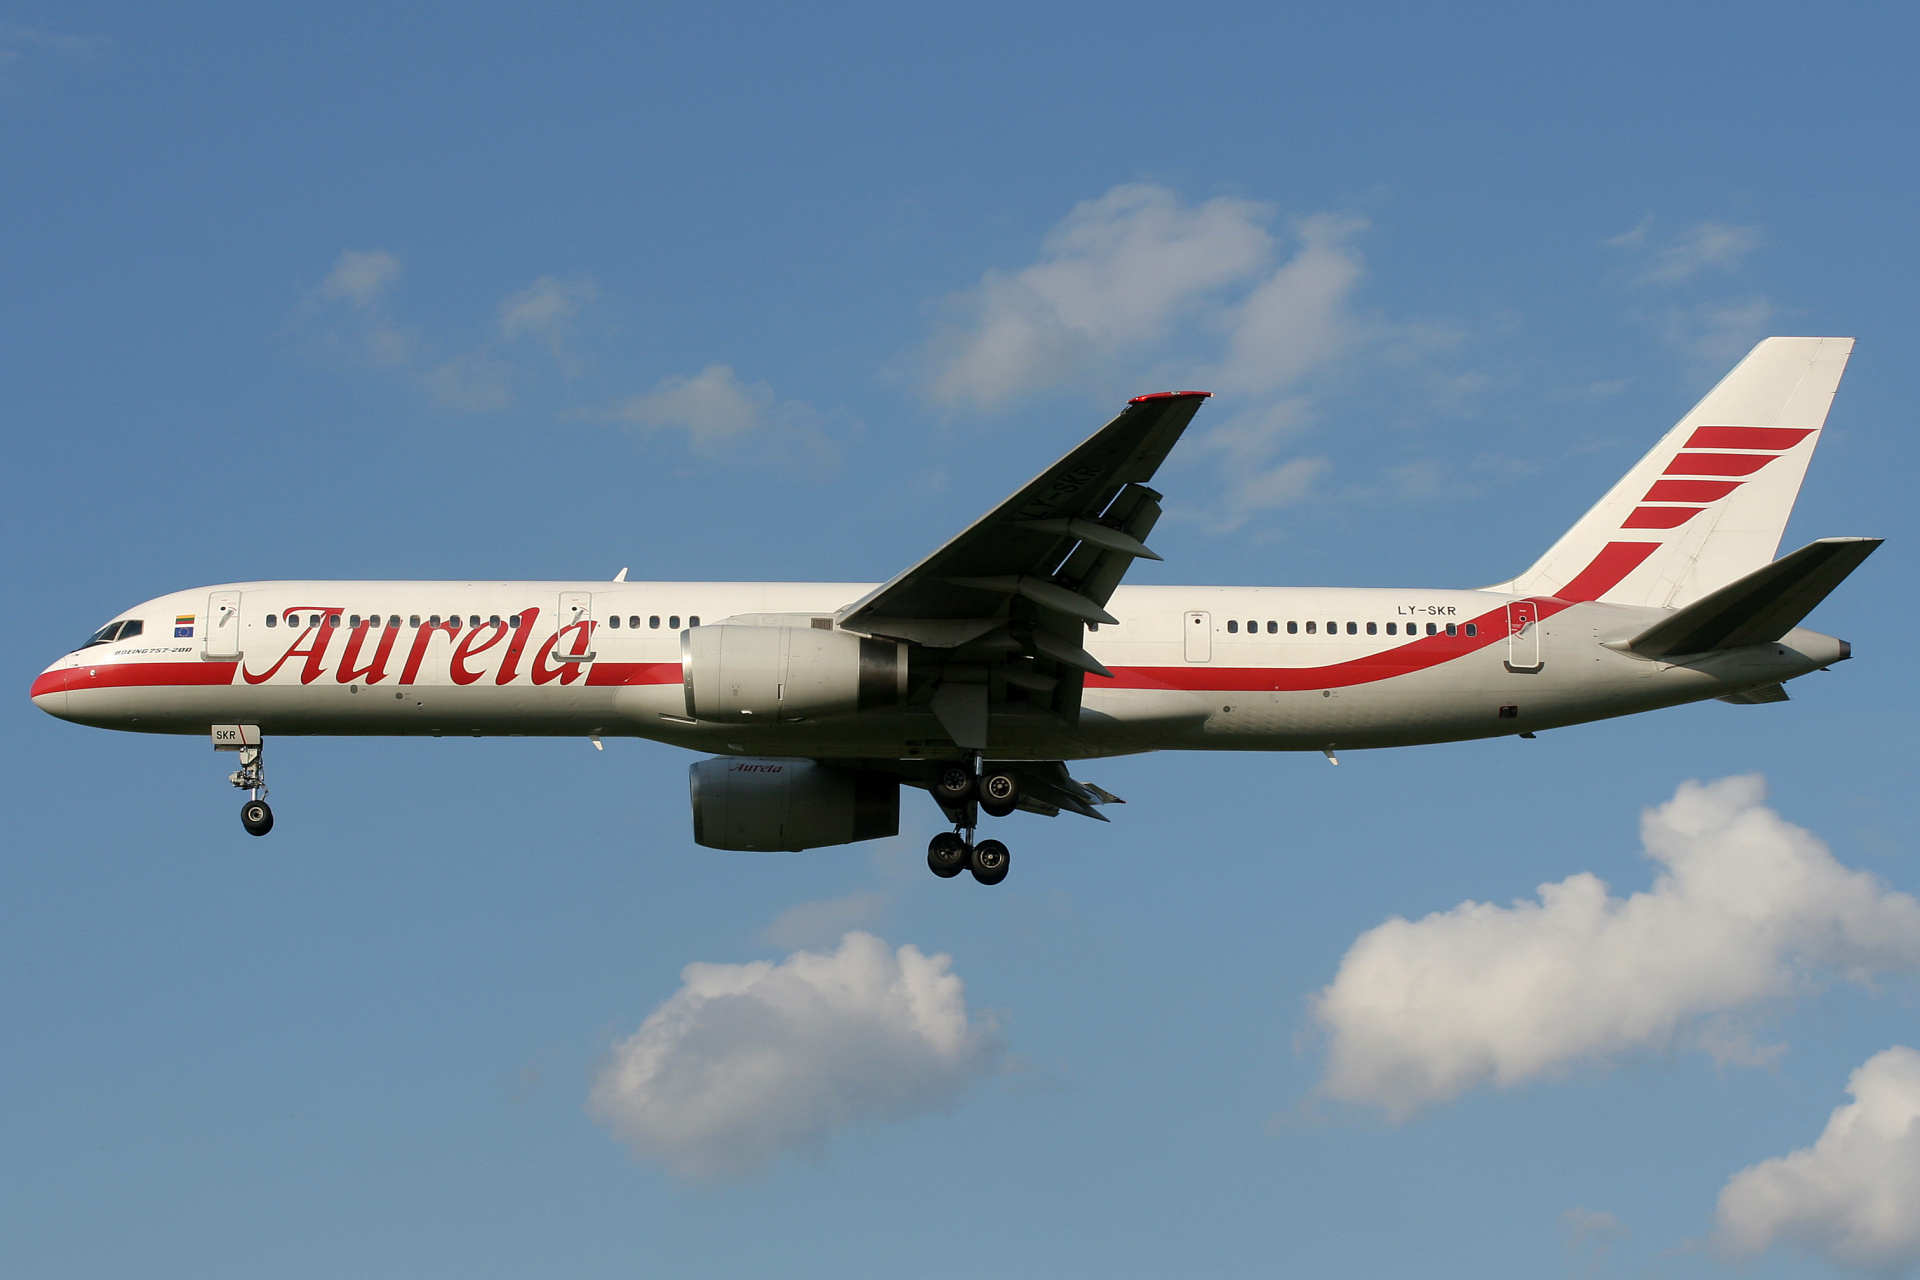 LY-SKR (Aircraft » EPWA Spotting » Boeing 757-200 » Aurela)